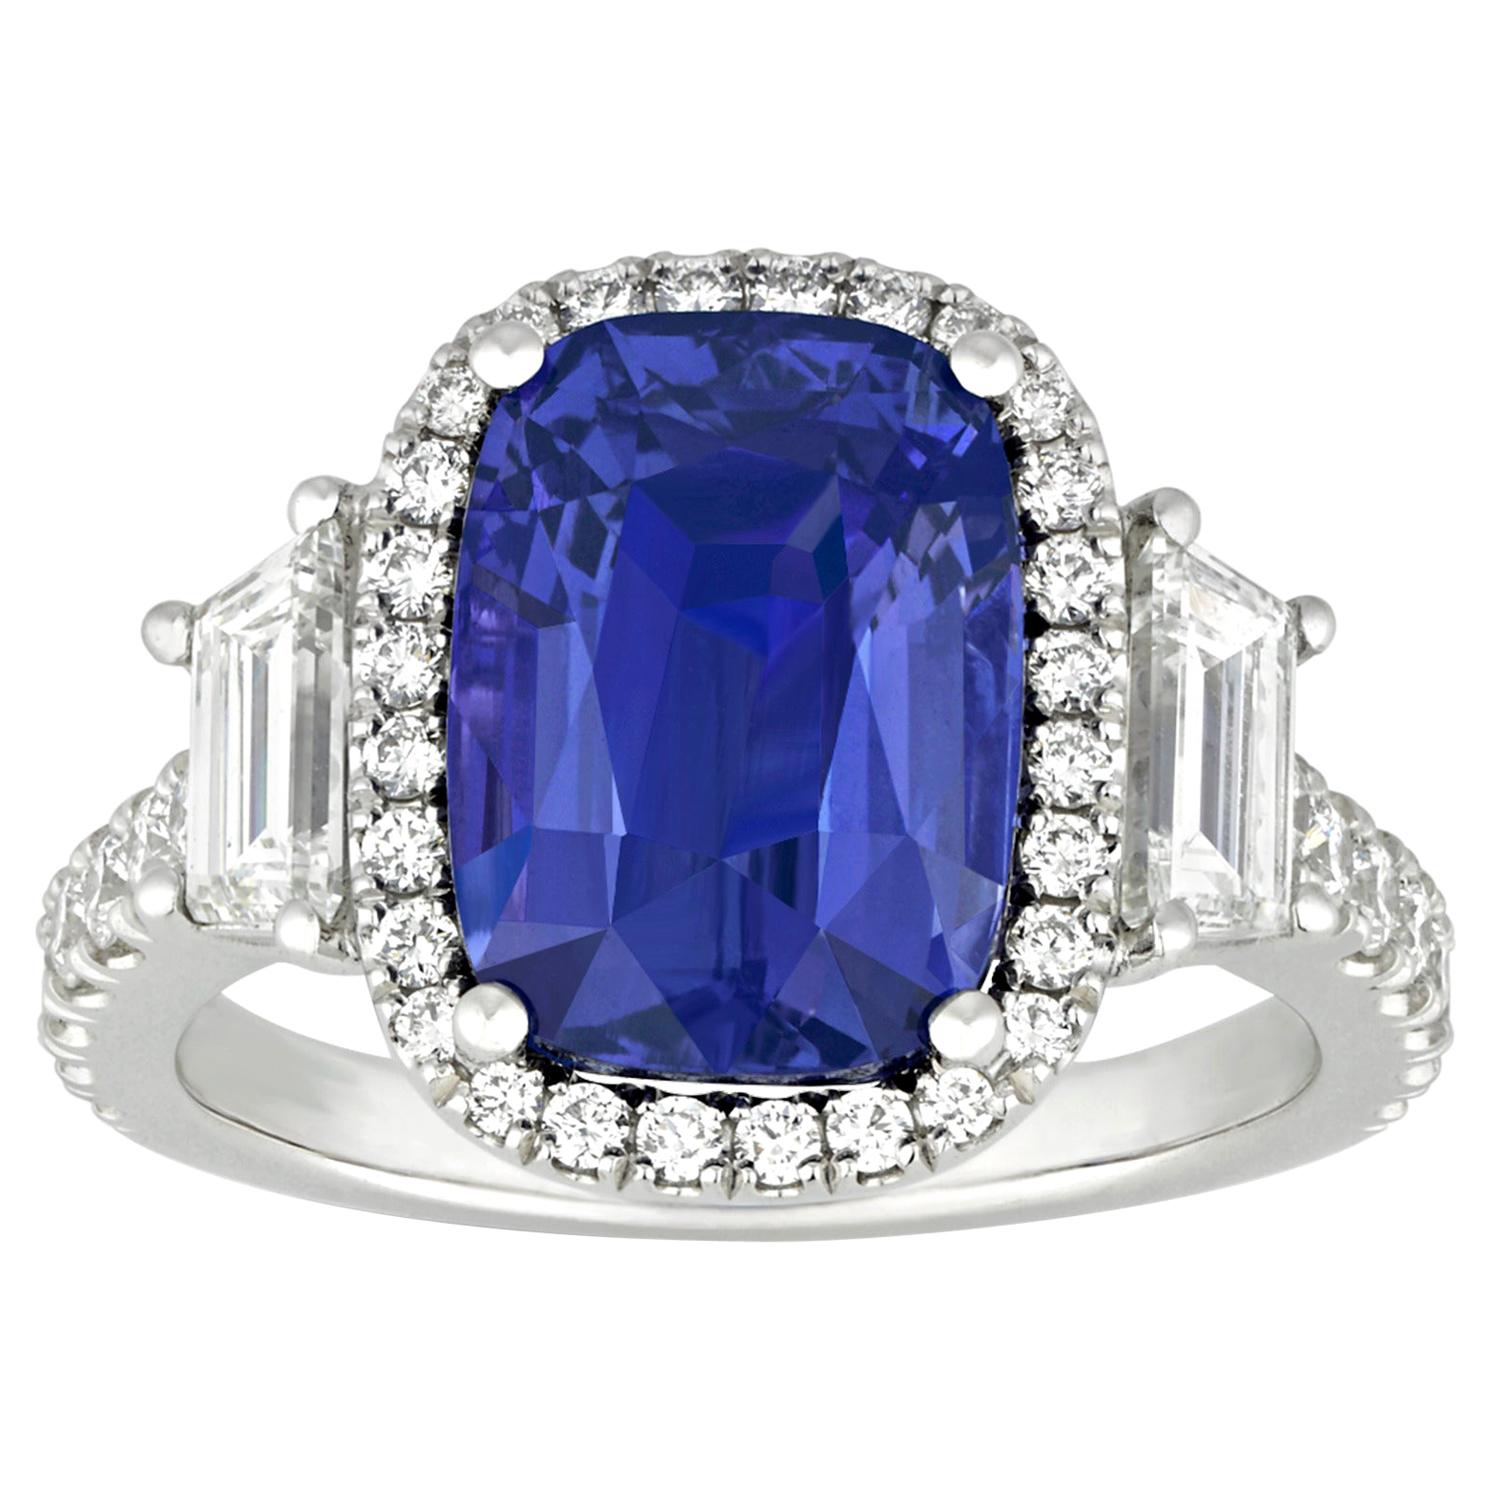 Color-Change Sapphire Ring, 6.59 Carat